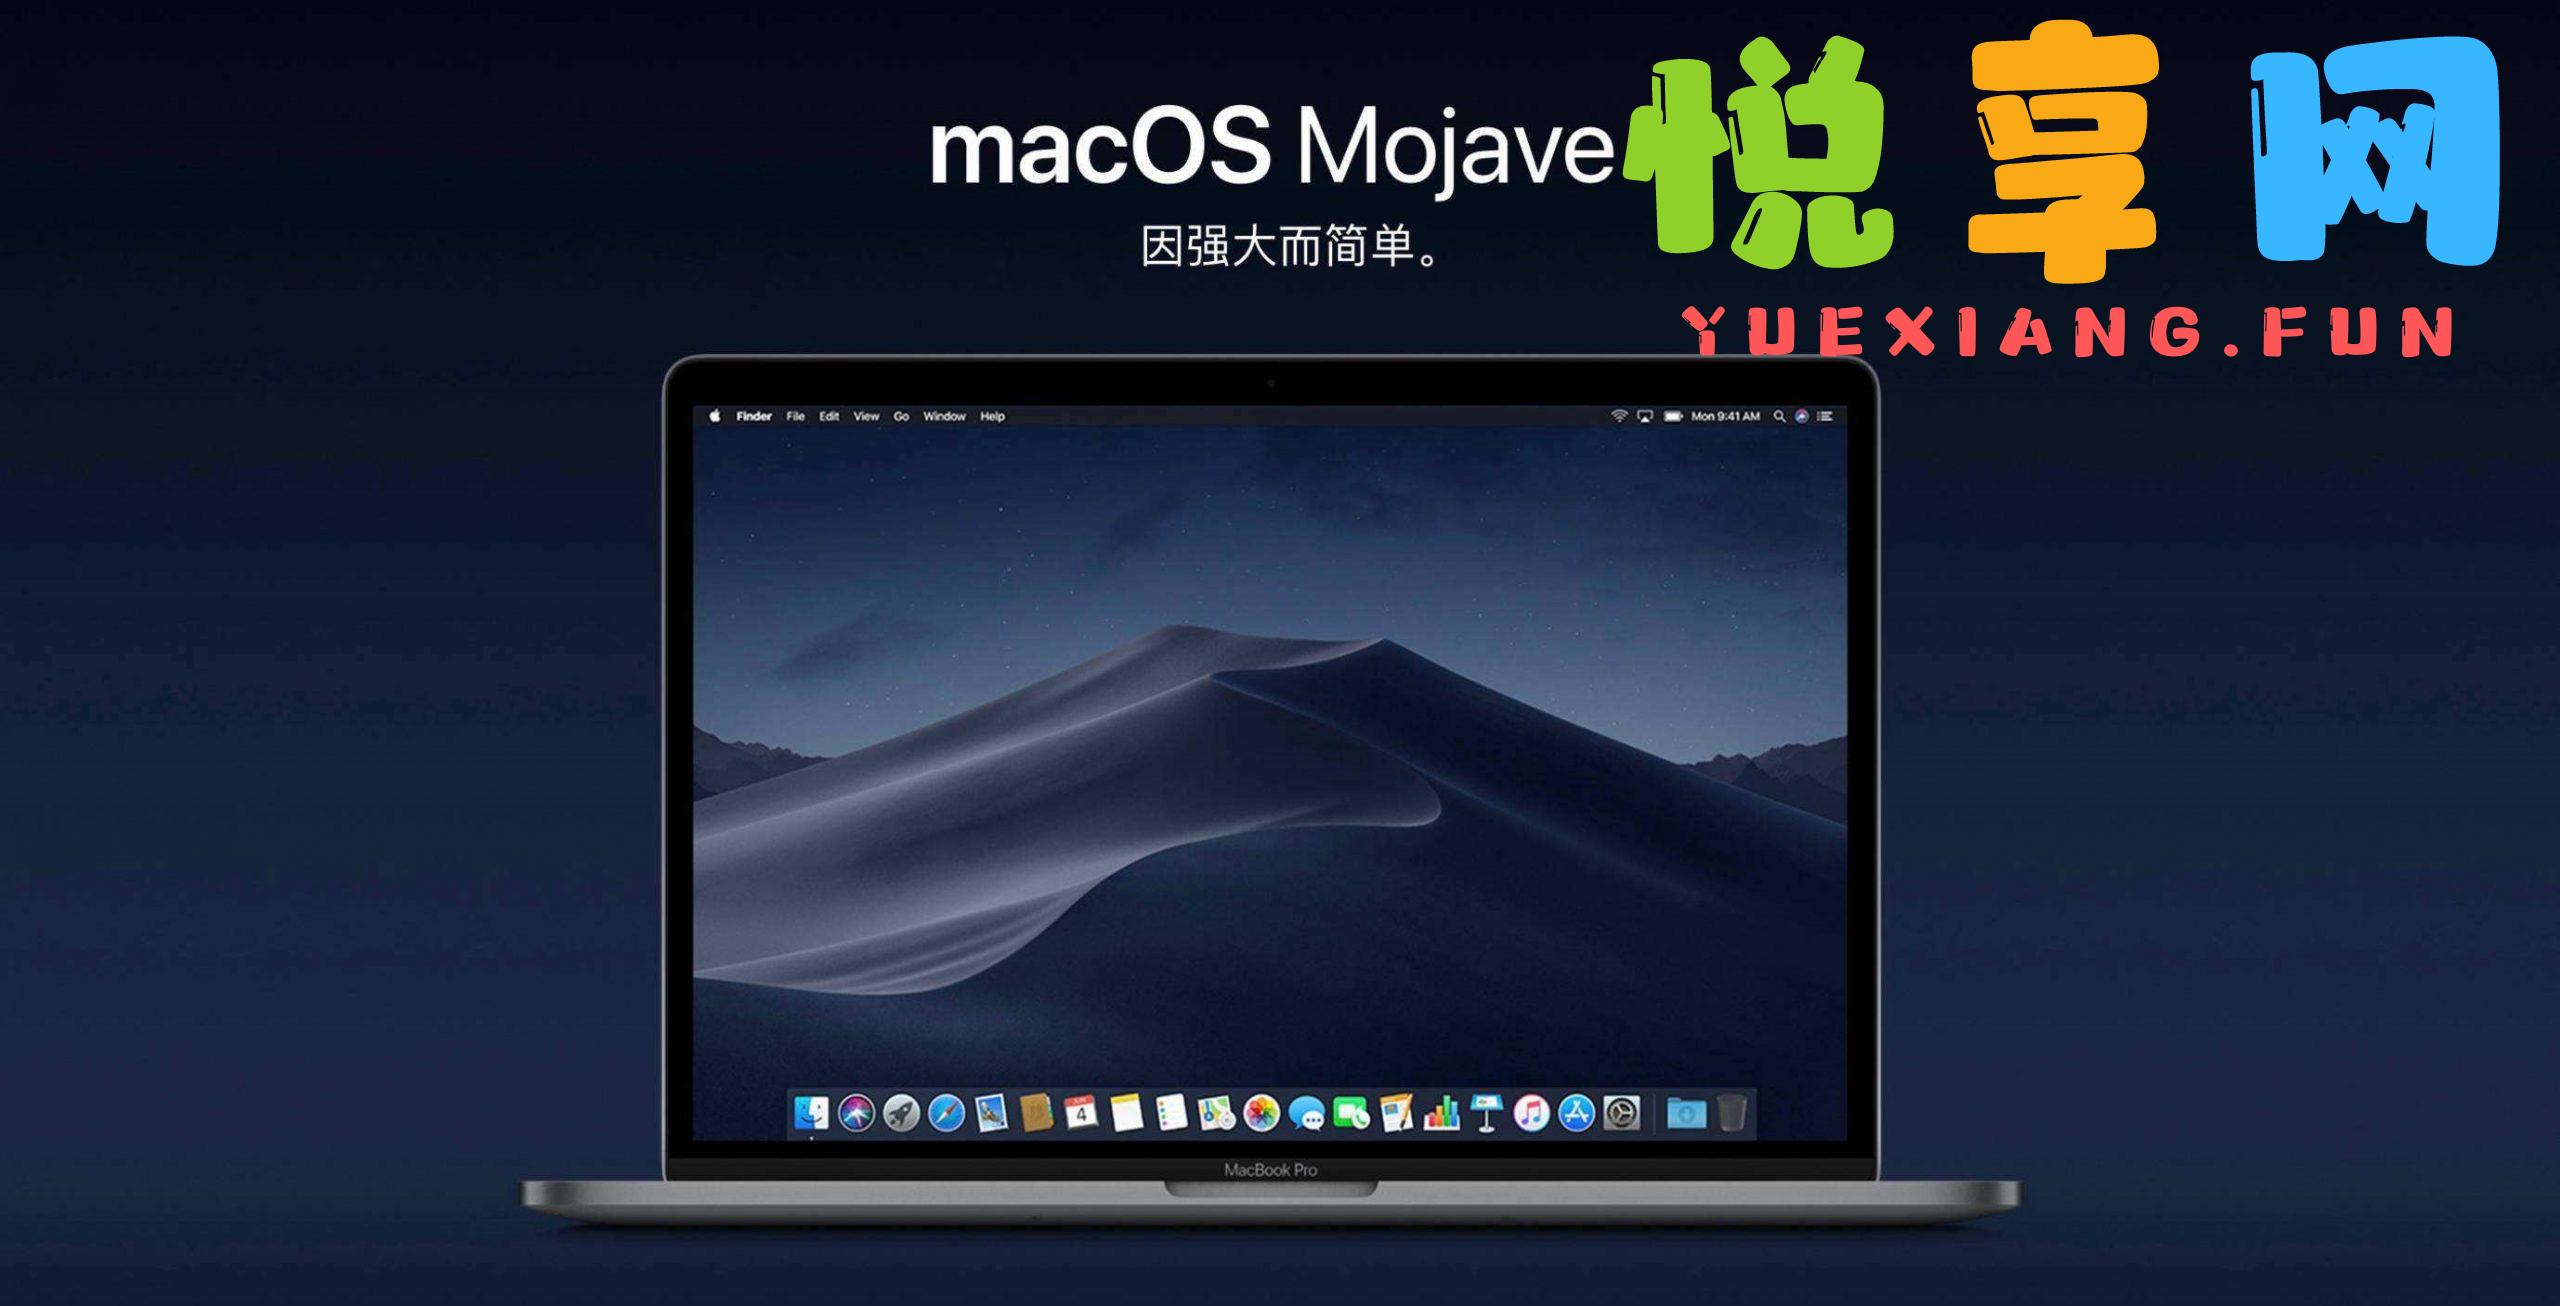 MacOS Mojave 10.14.6 纯净恢复版镜像